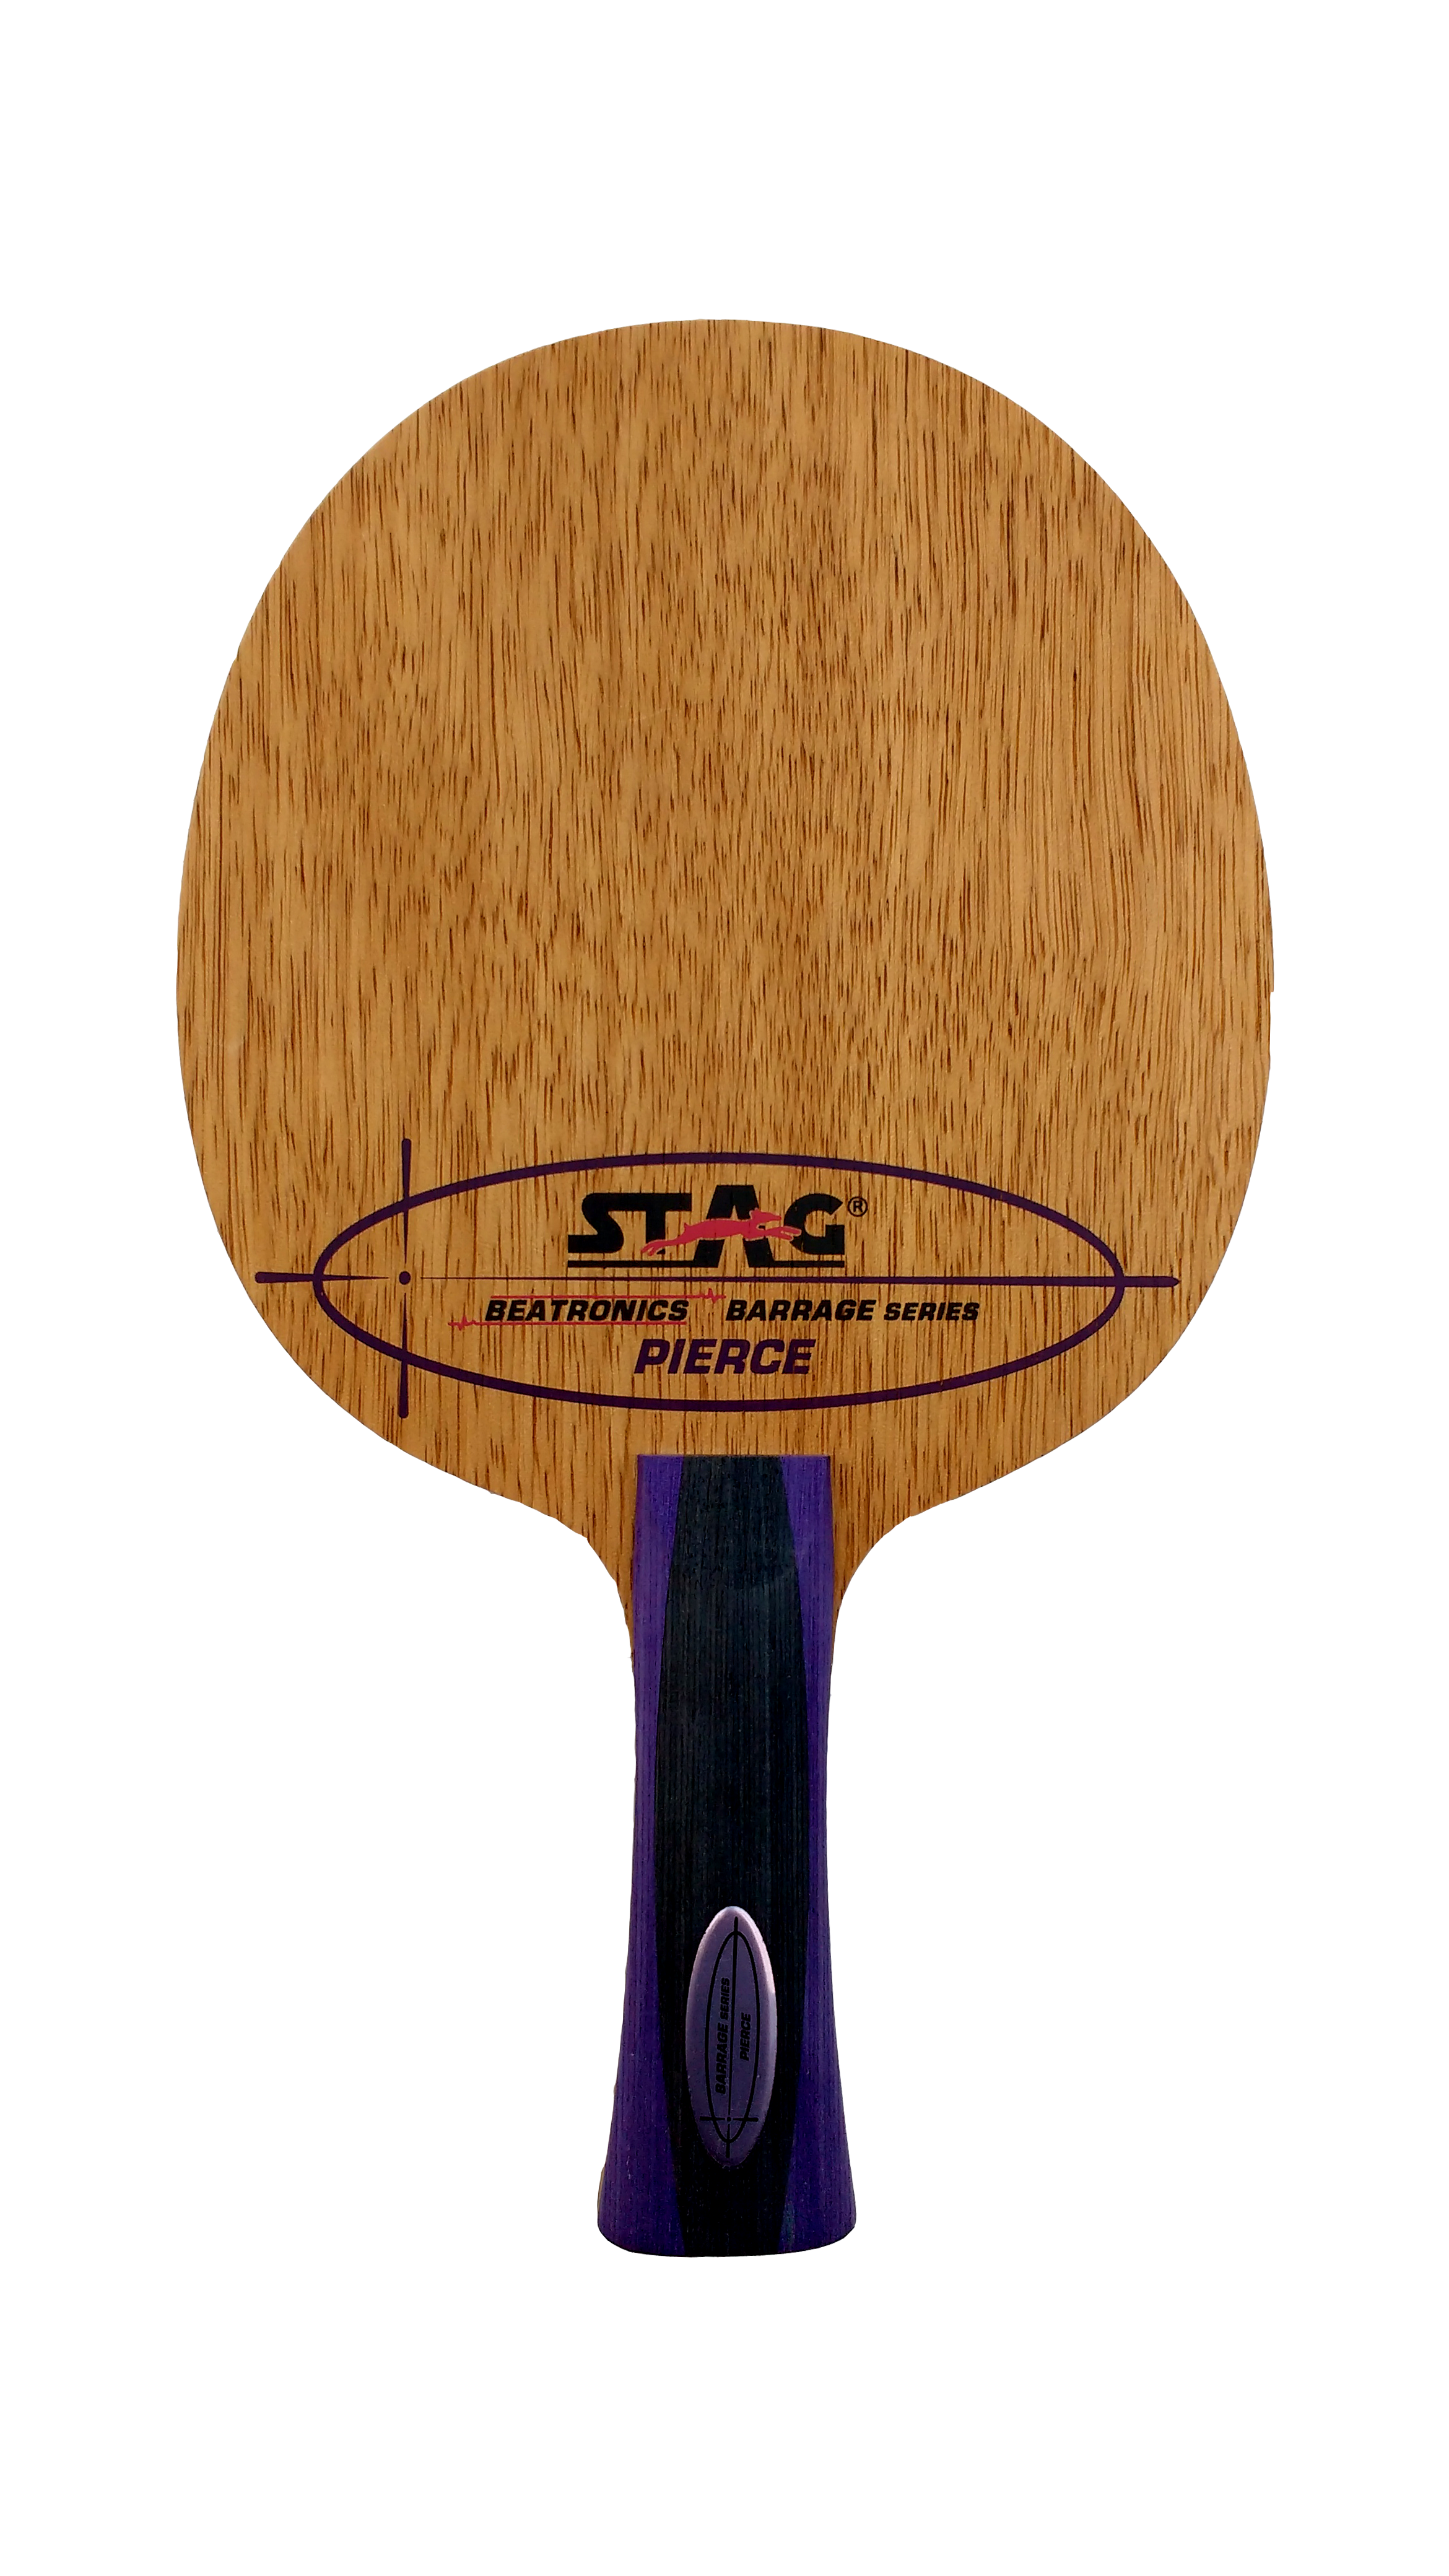 Stag Beatronics Series Pierce Table Tennis Blade